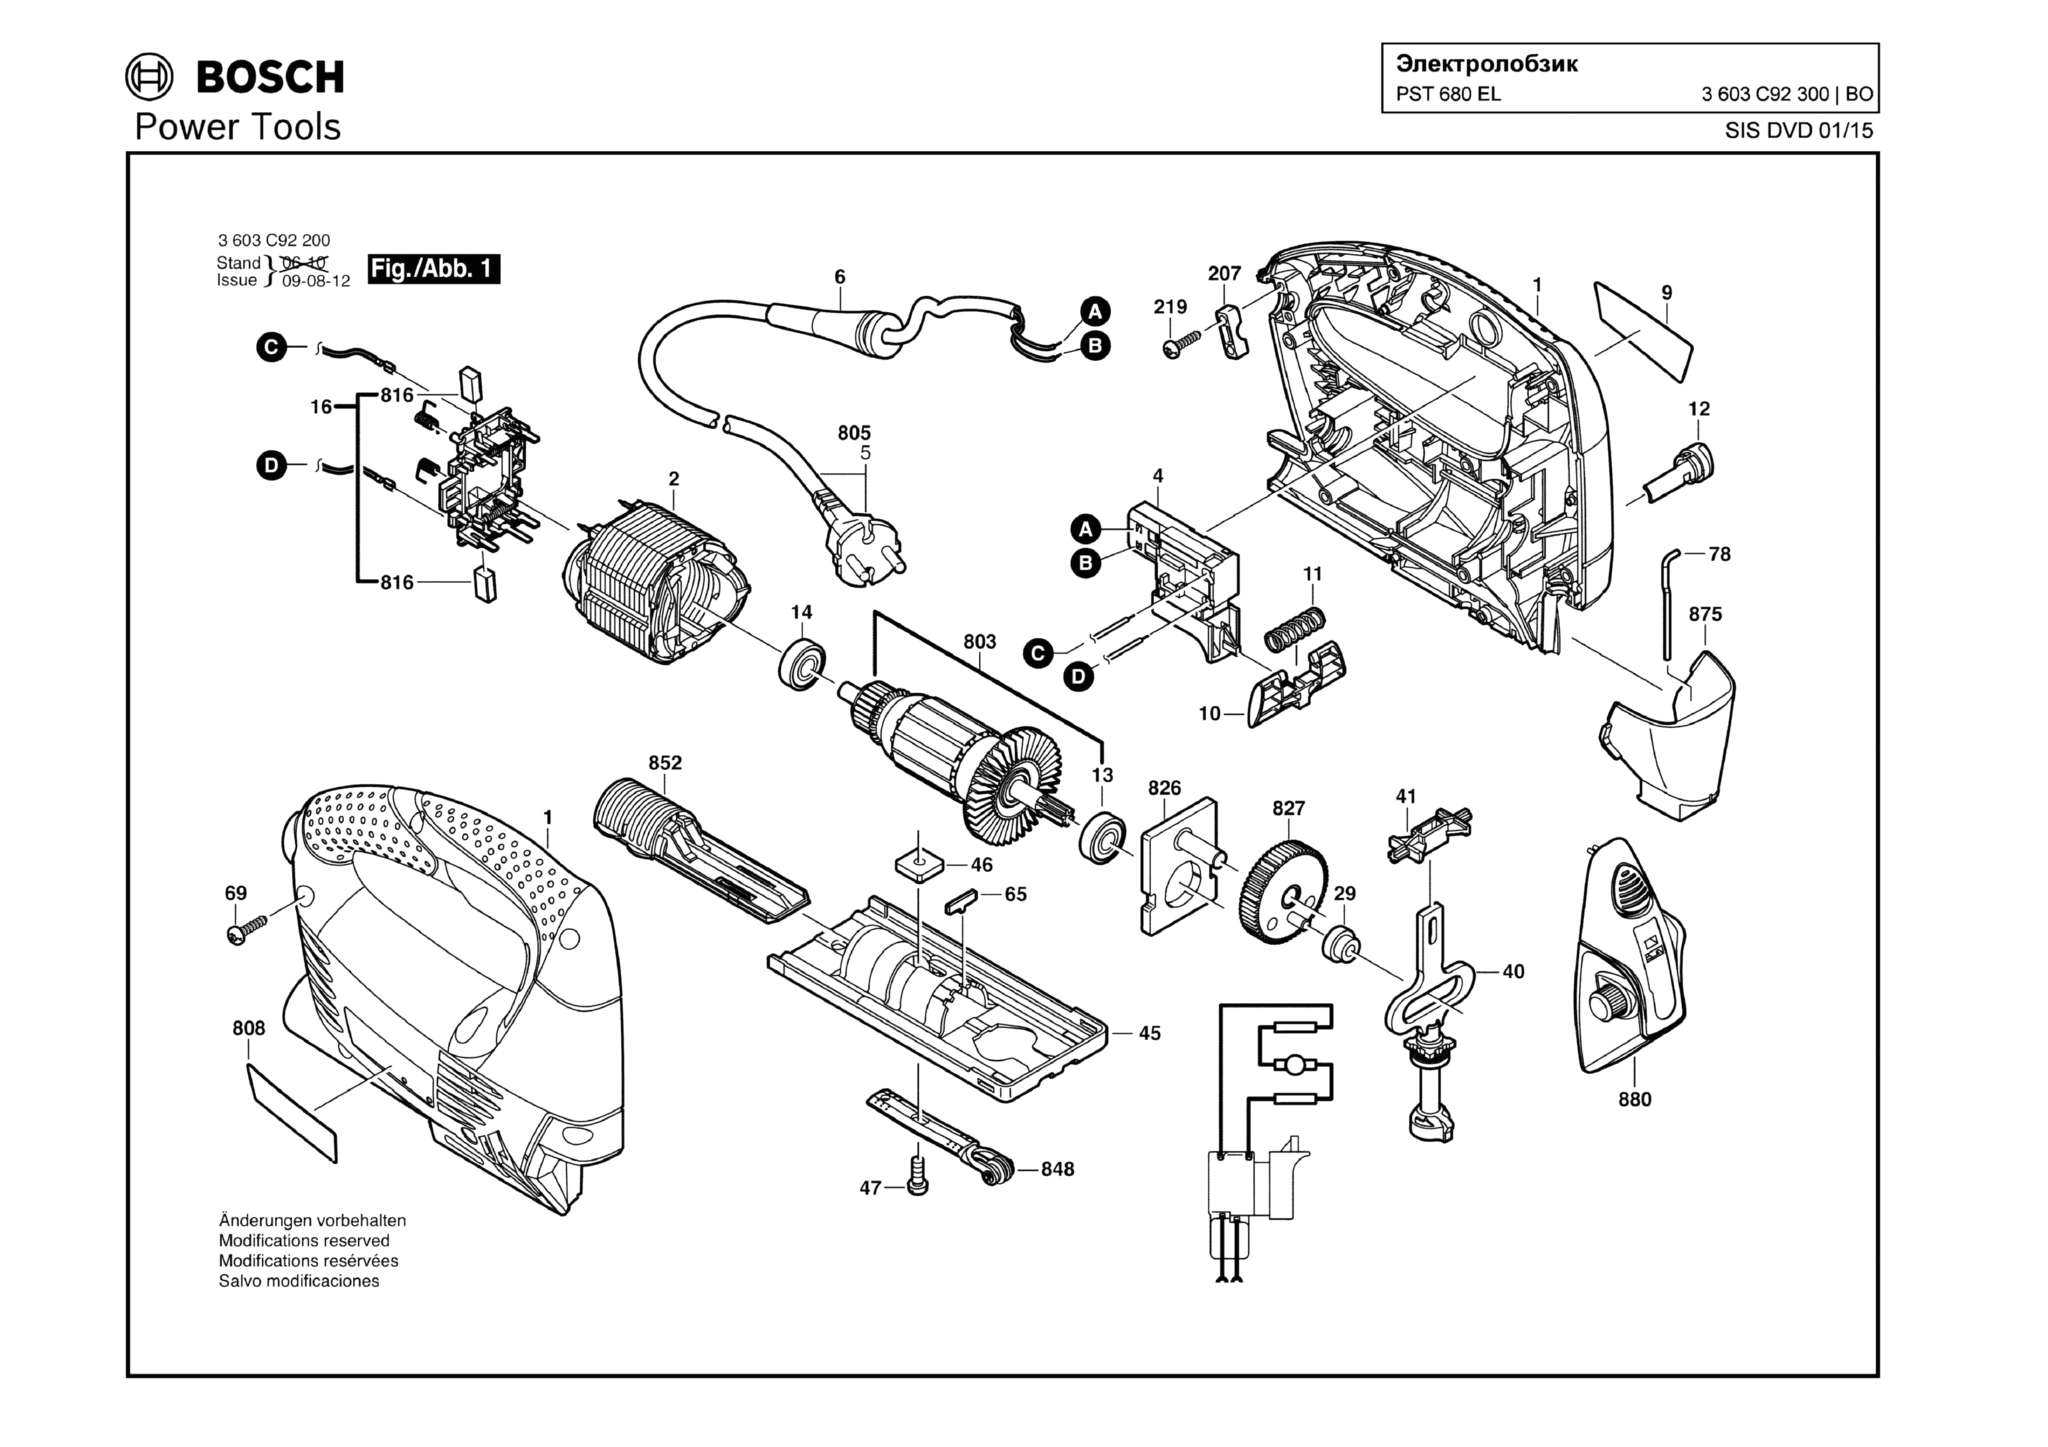 Запчасти, схема и деталировка Bosch PST 680 EL (ТИП 3603C92300)